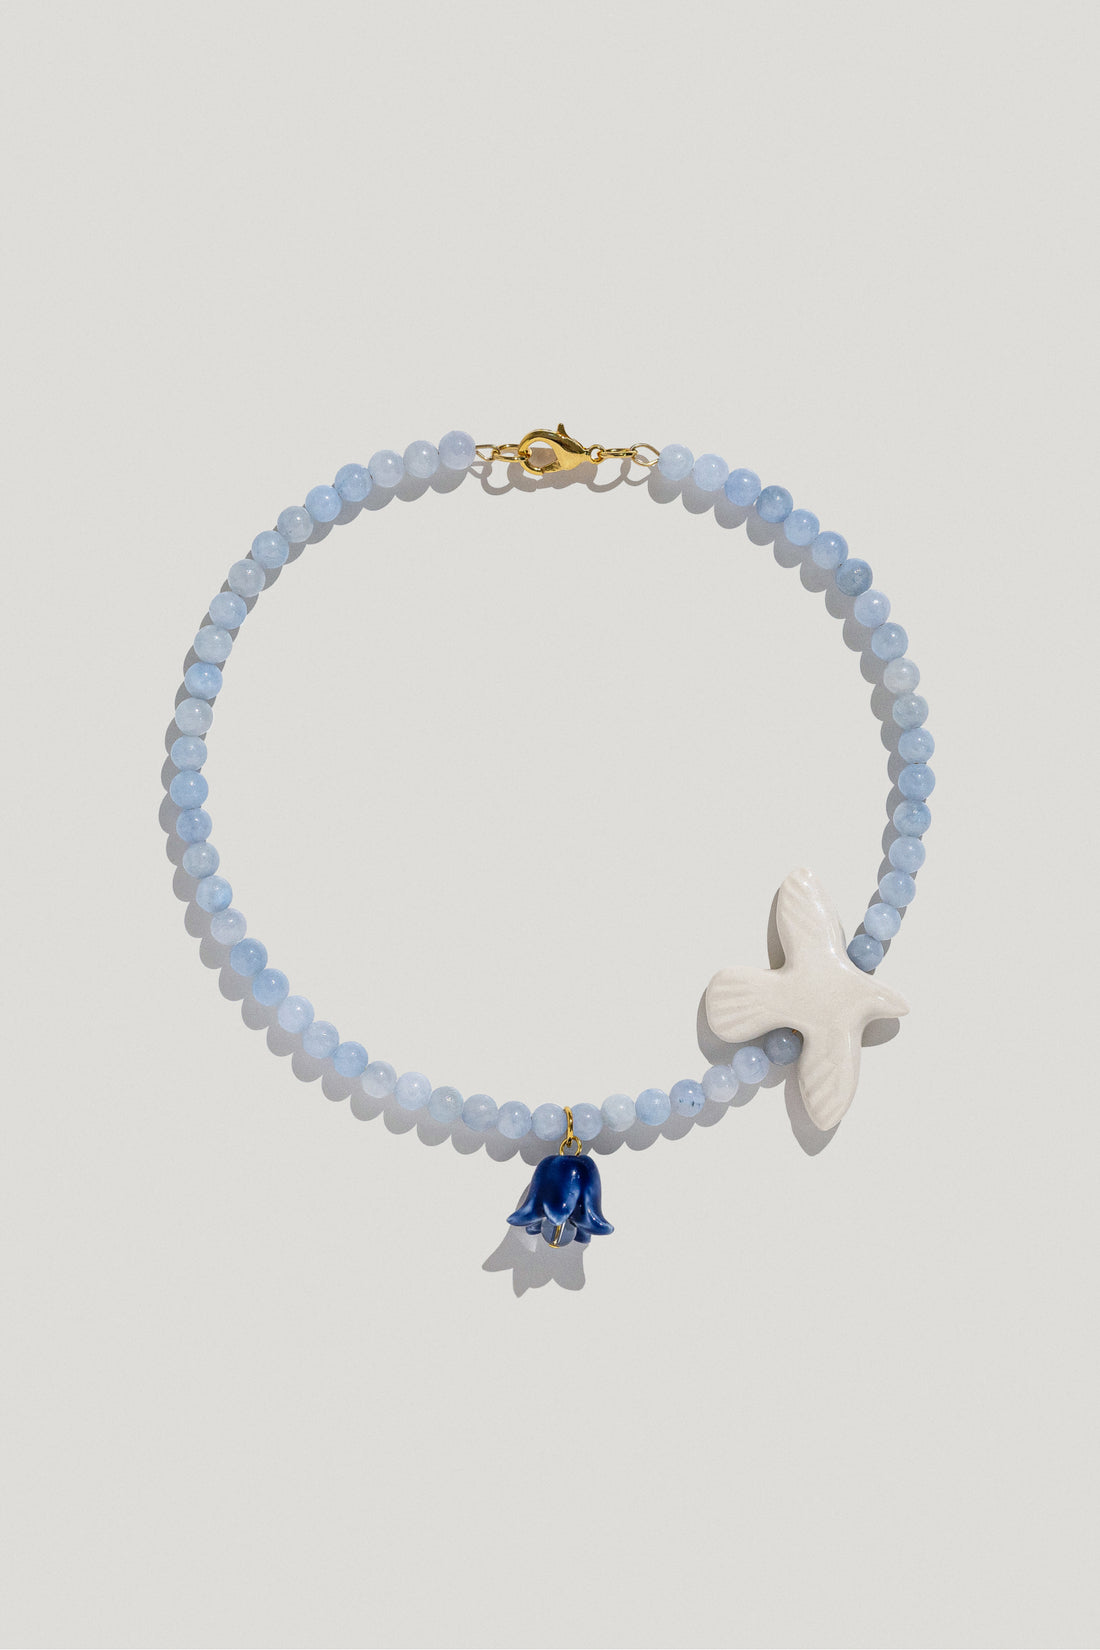 Polysk necklace with blue quartz, porcelain bird and flower